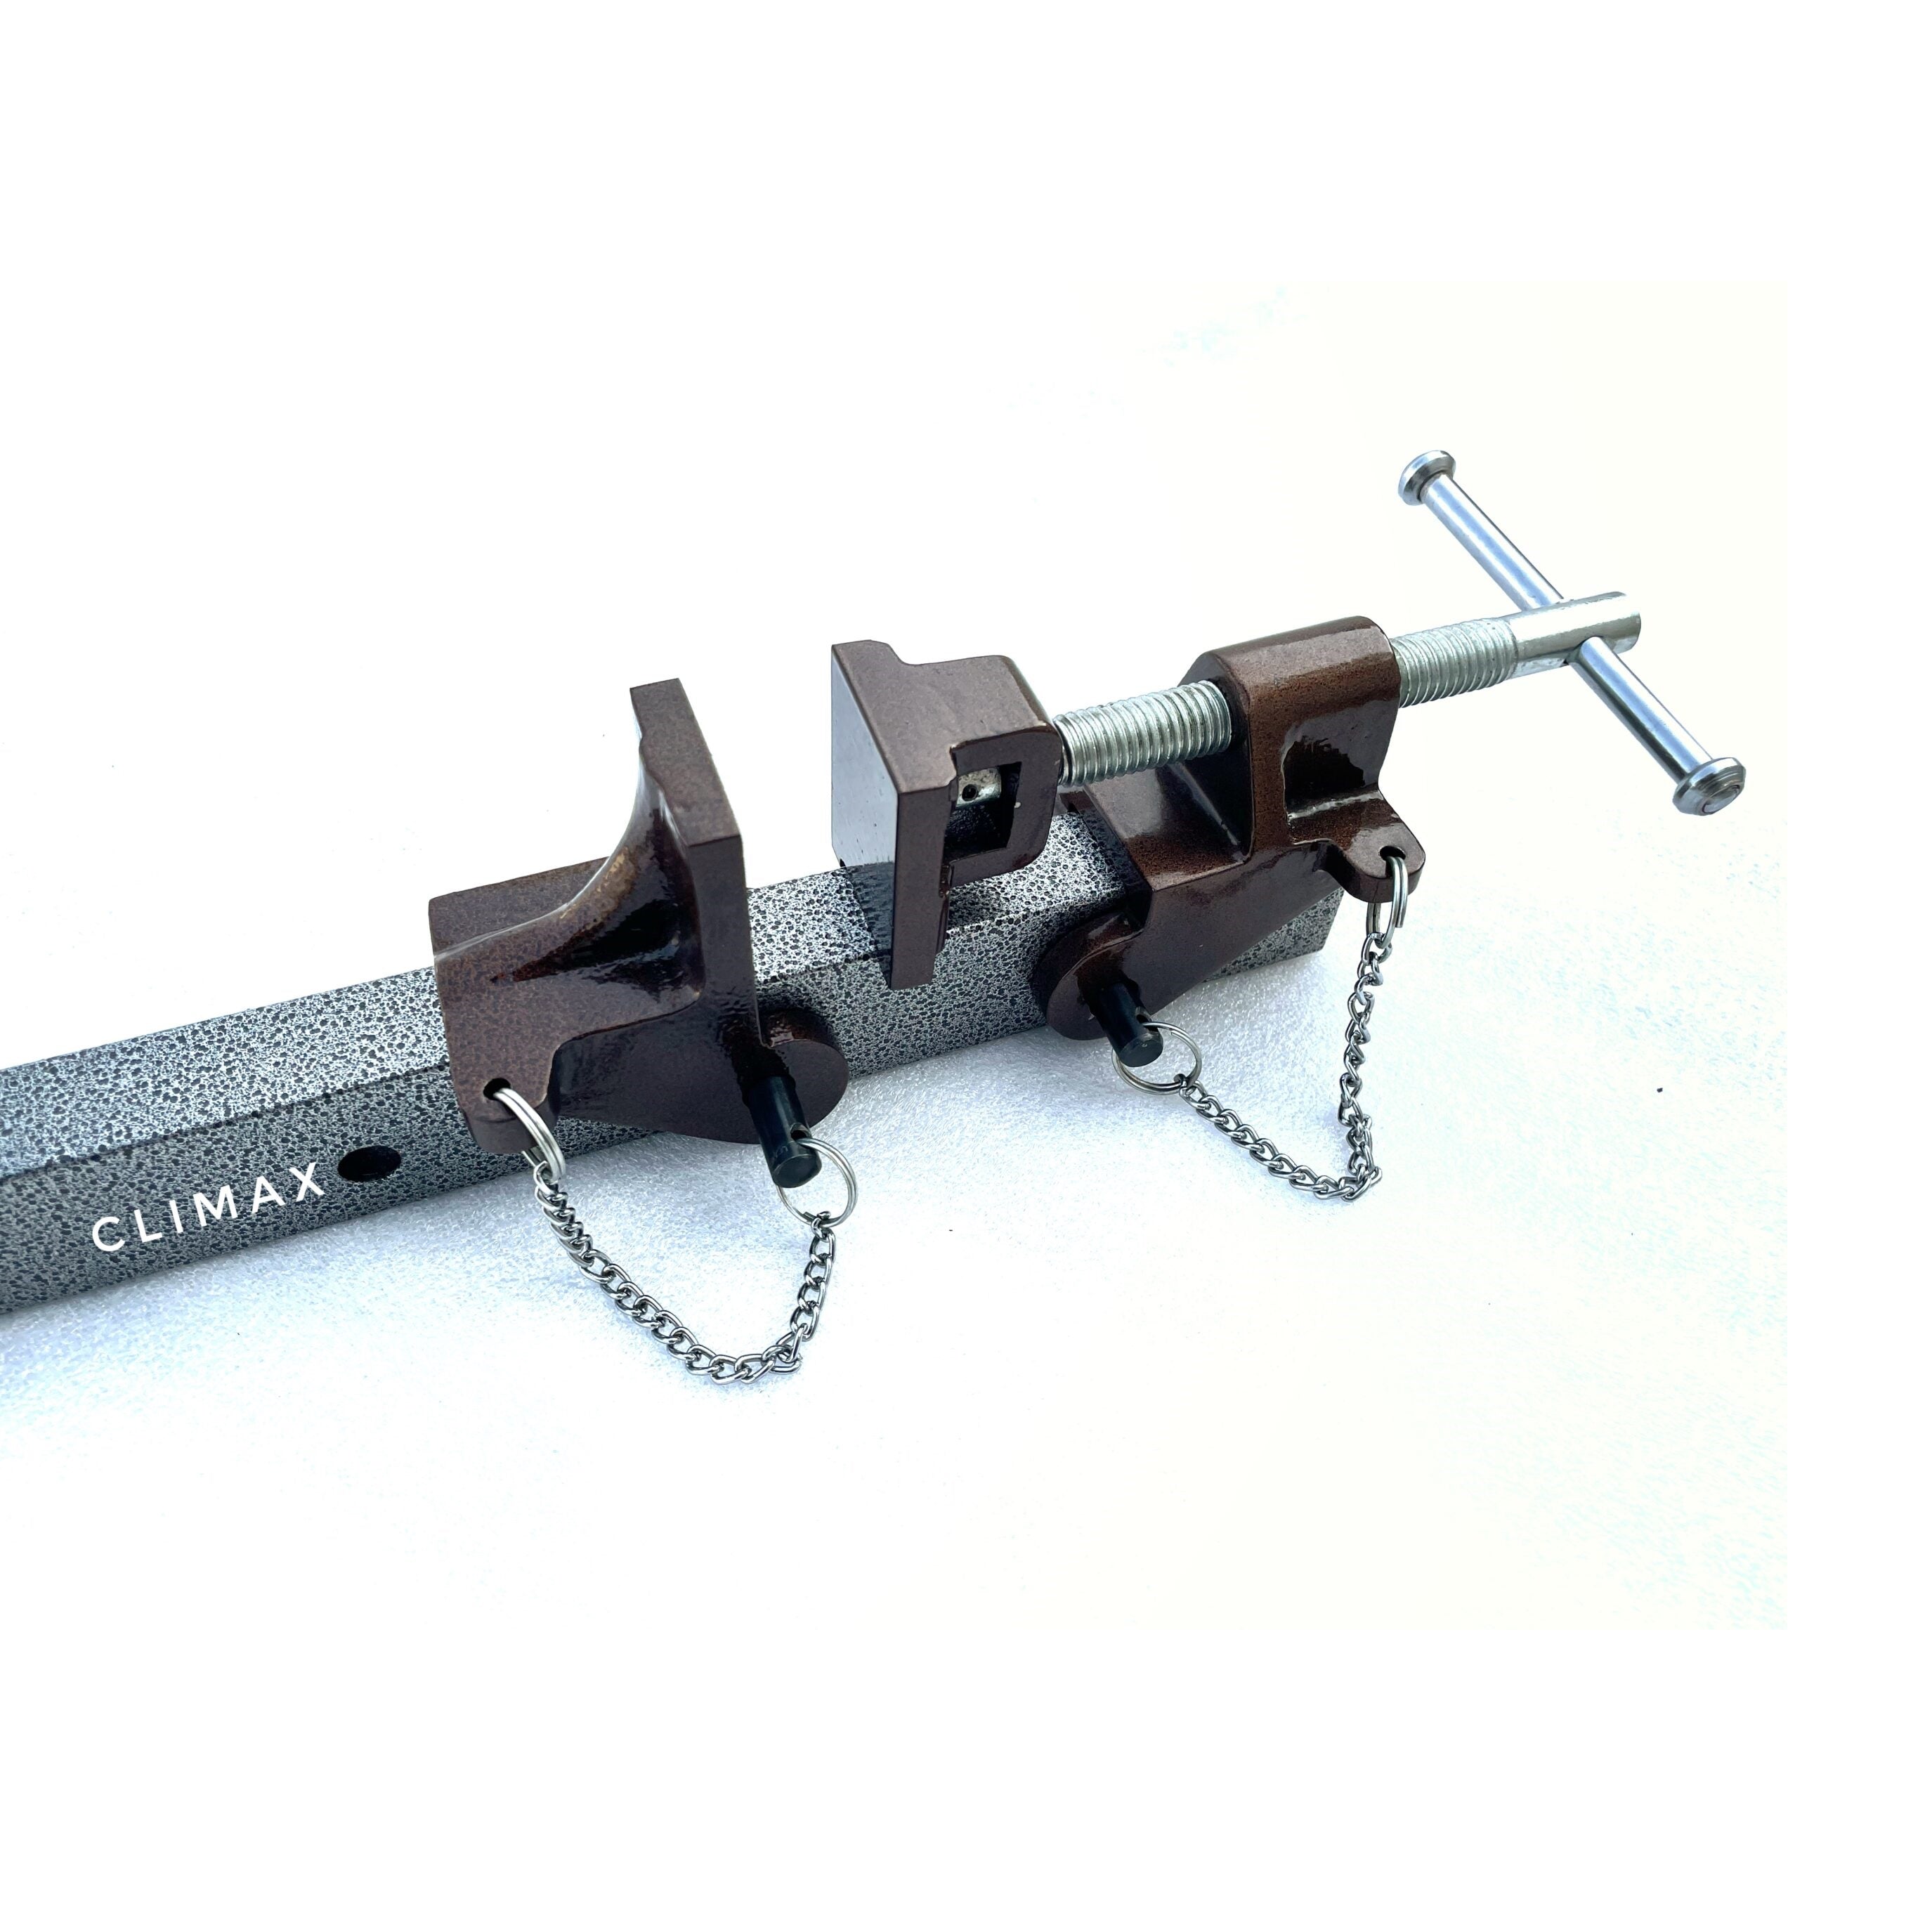 Climax Rapid Folding Wood Working Vice 500mm-6ft WWV-RF